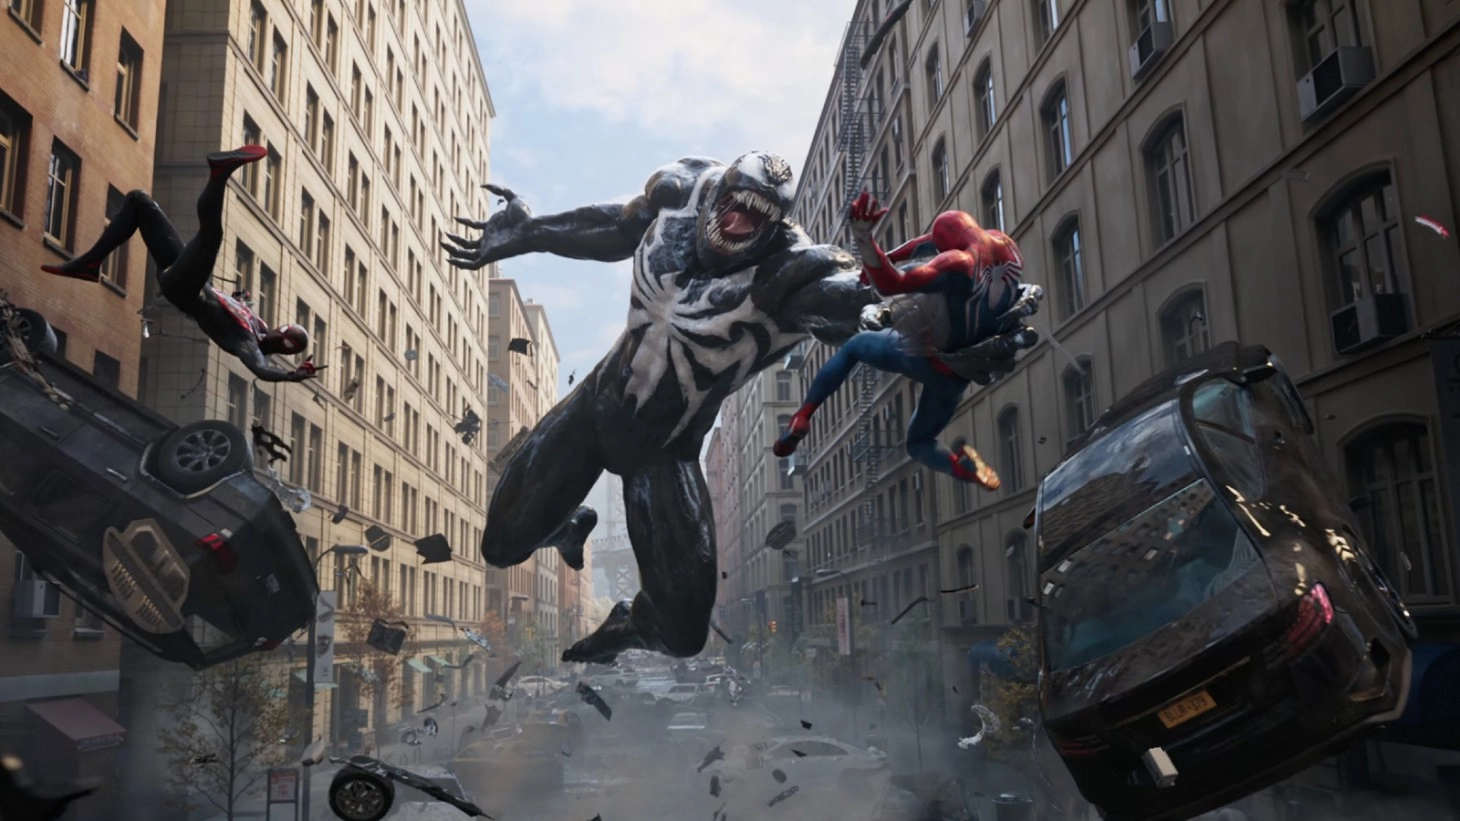 Spider-Man 2's New Trailer: A Web-Slinging Smorgasbord